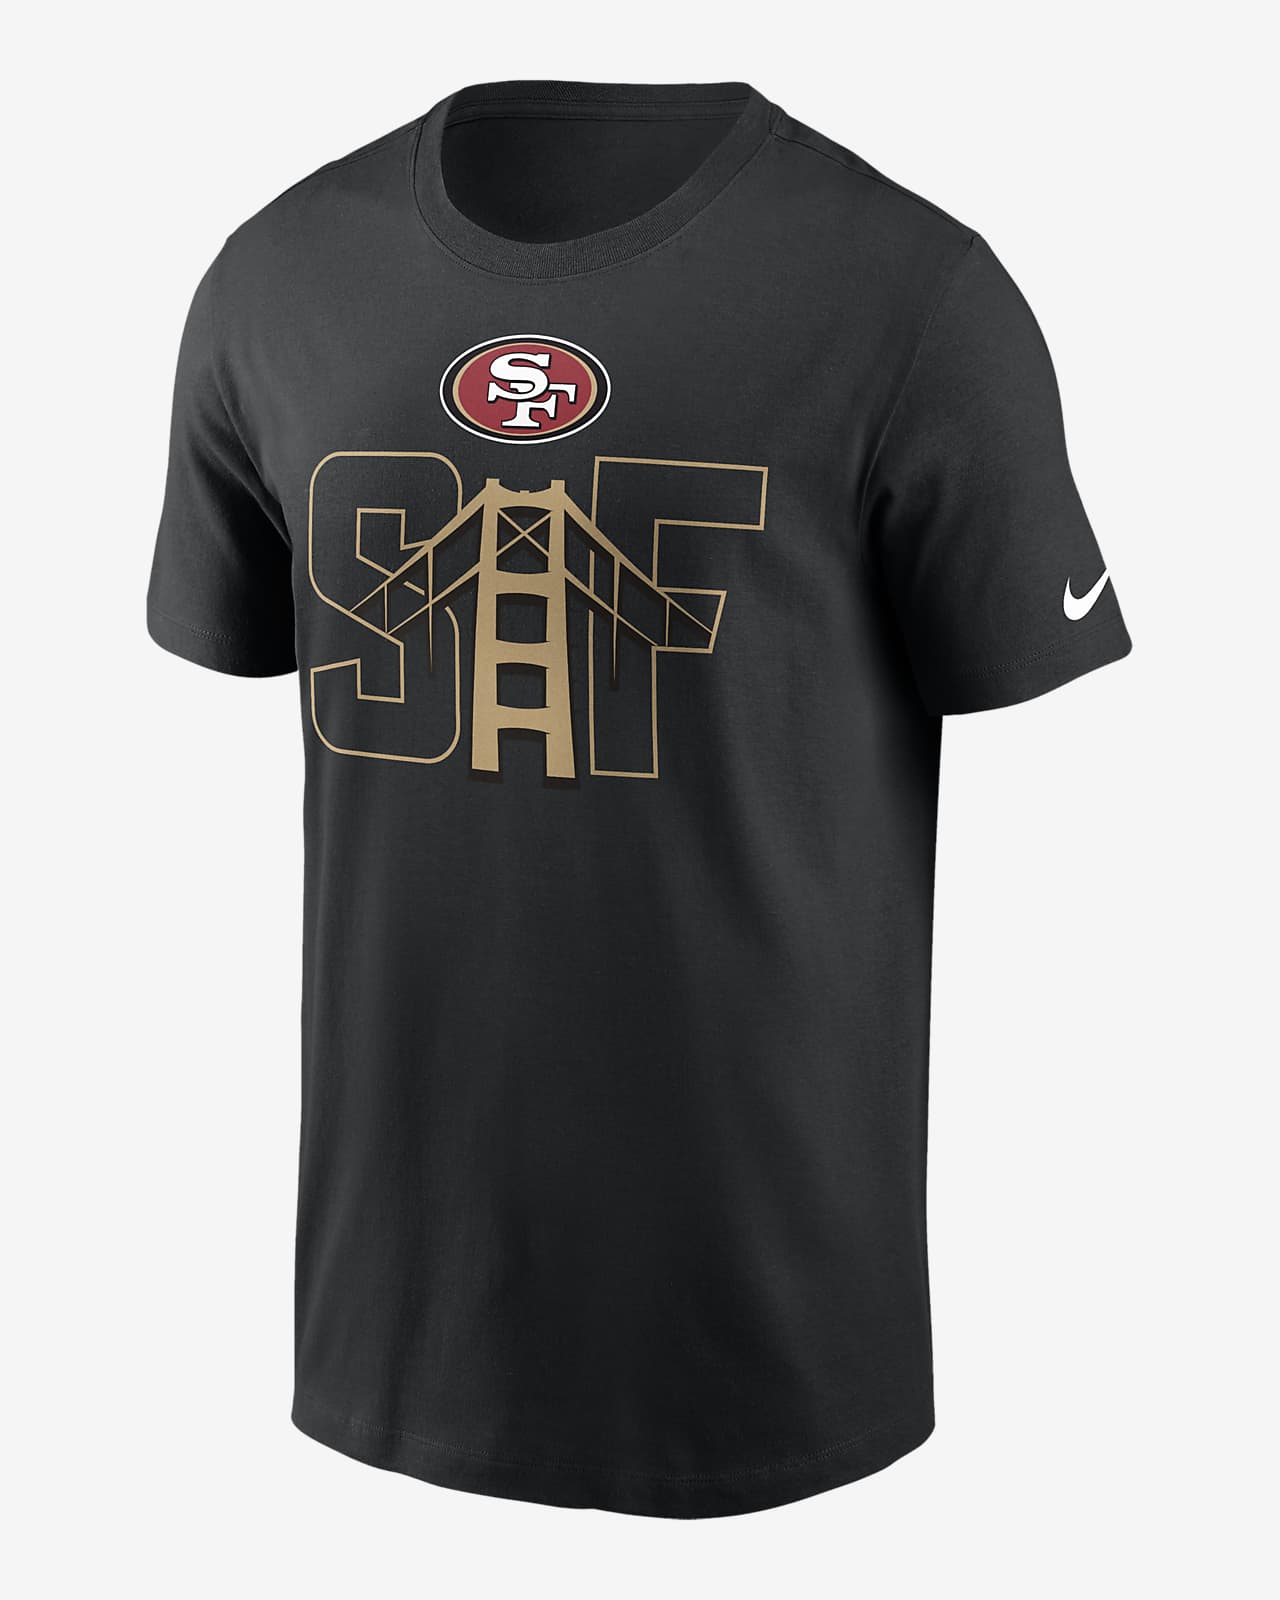 Men's Nike Black San Francisco 49ers Local Essential T-Shirt Size: 3XL